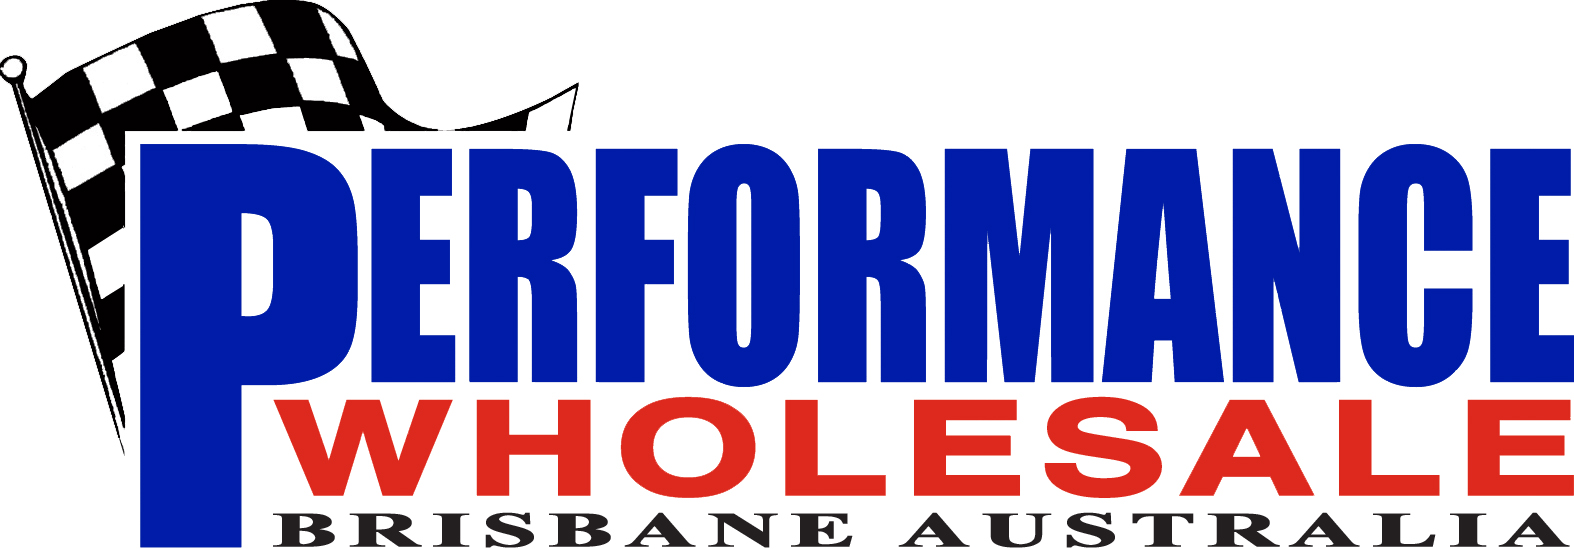 Performance Wholesale Australia